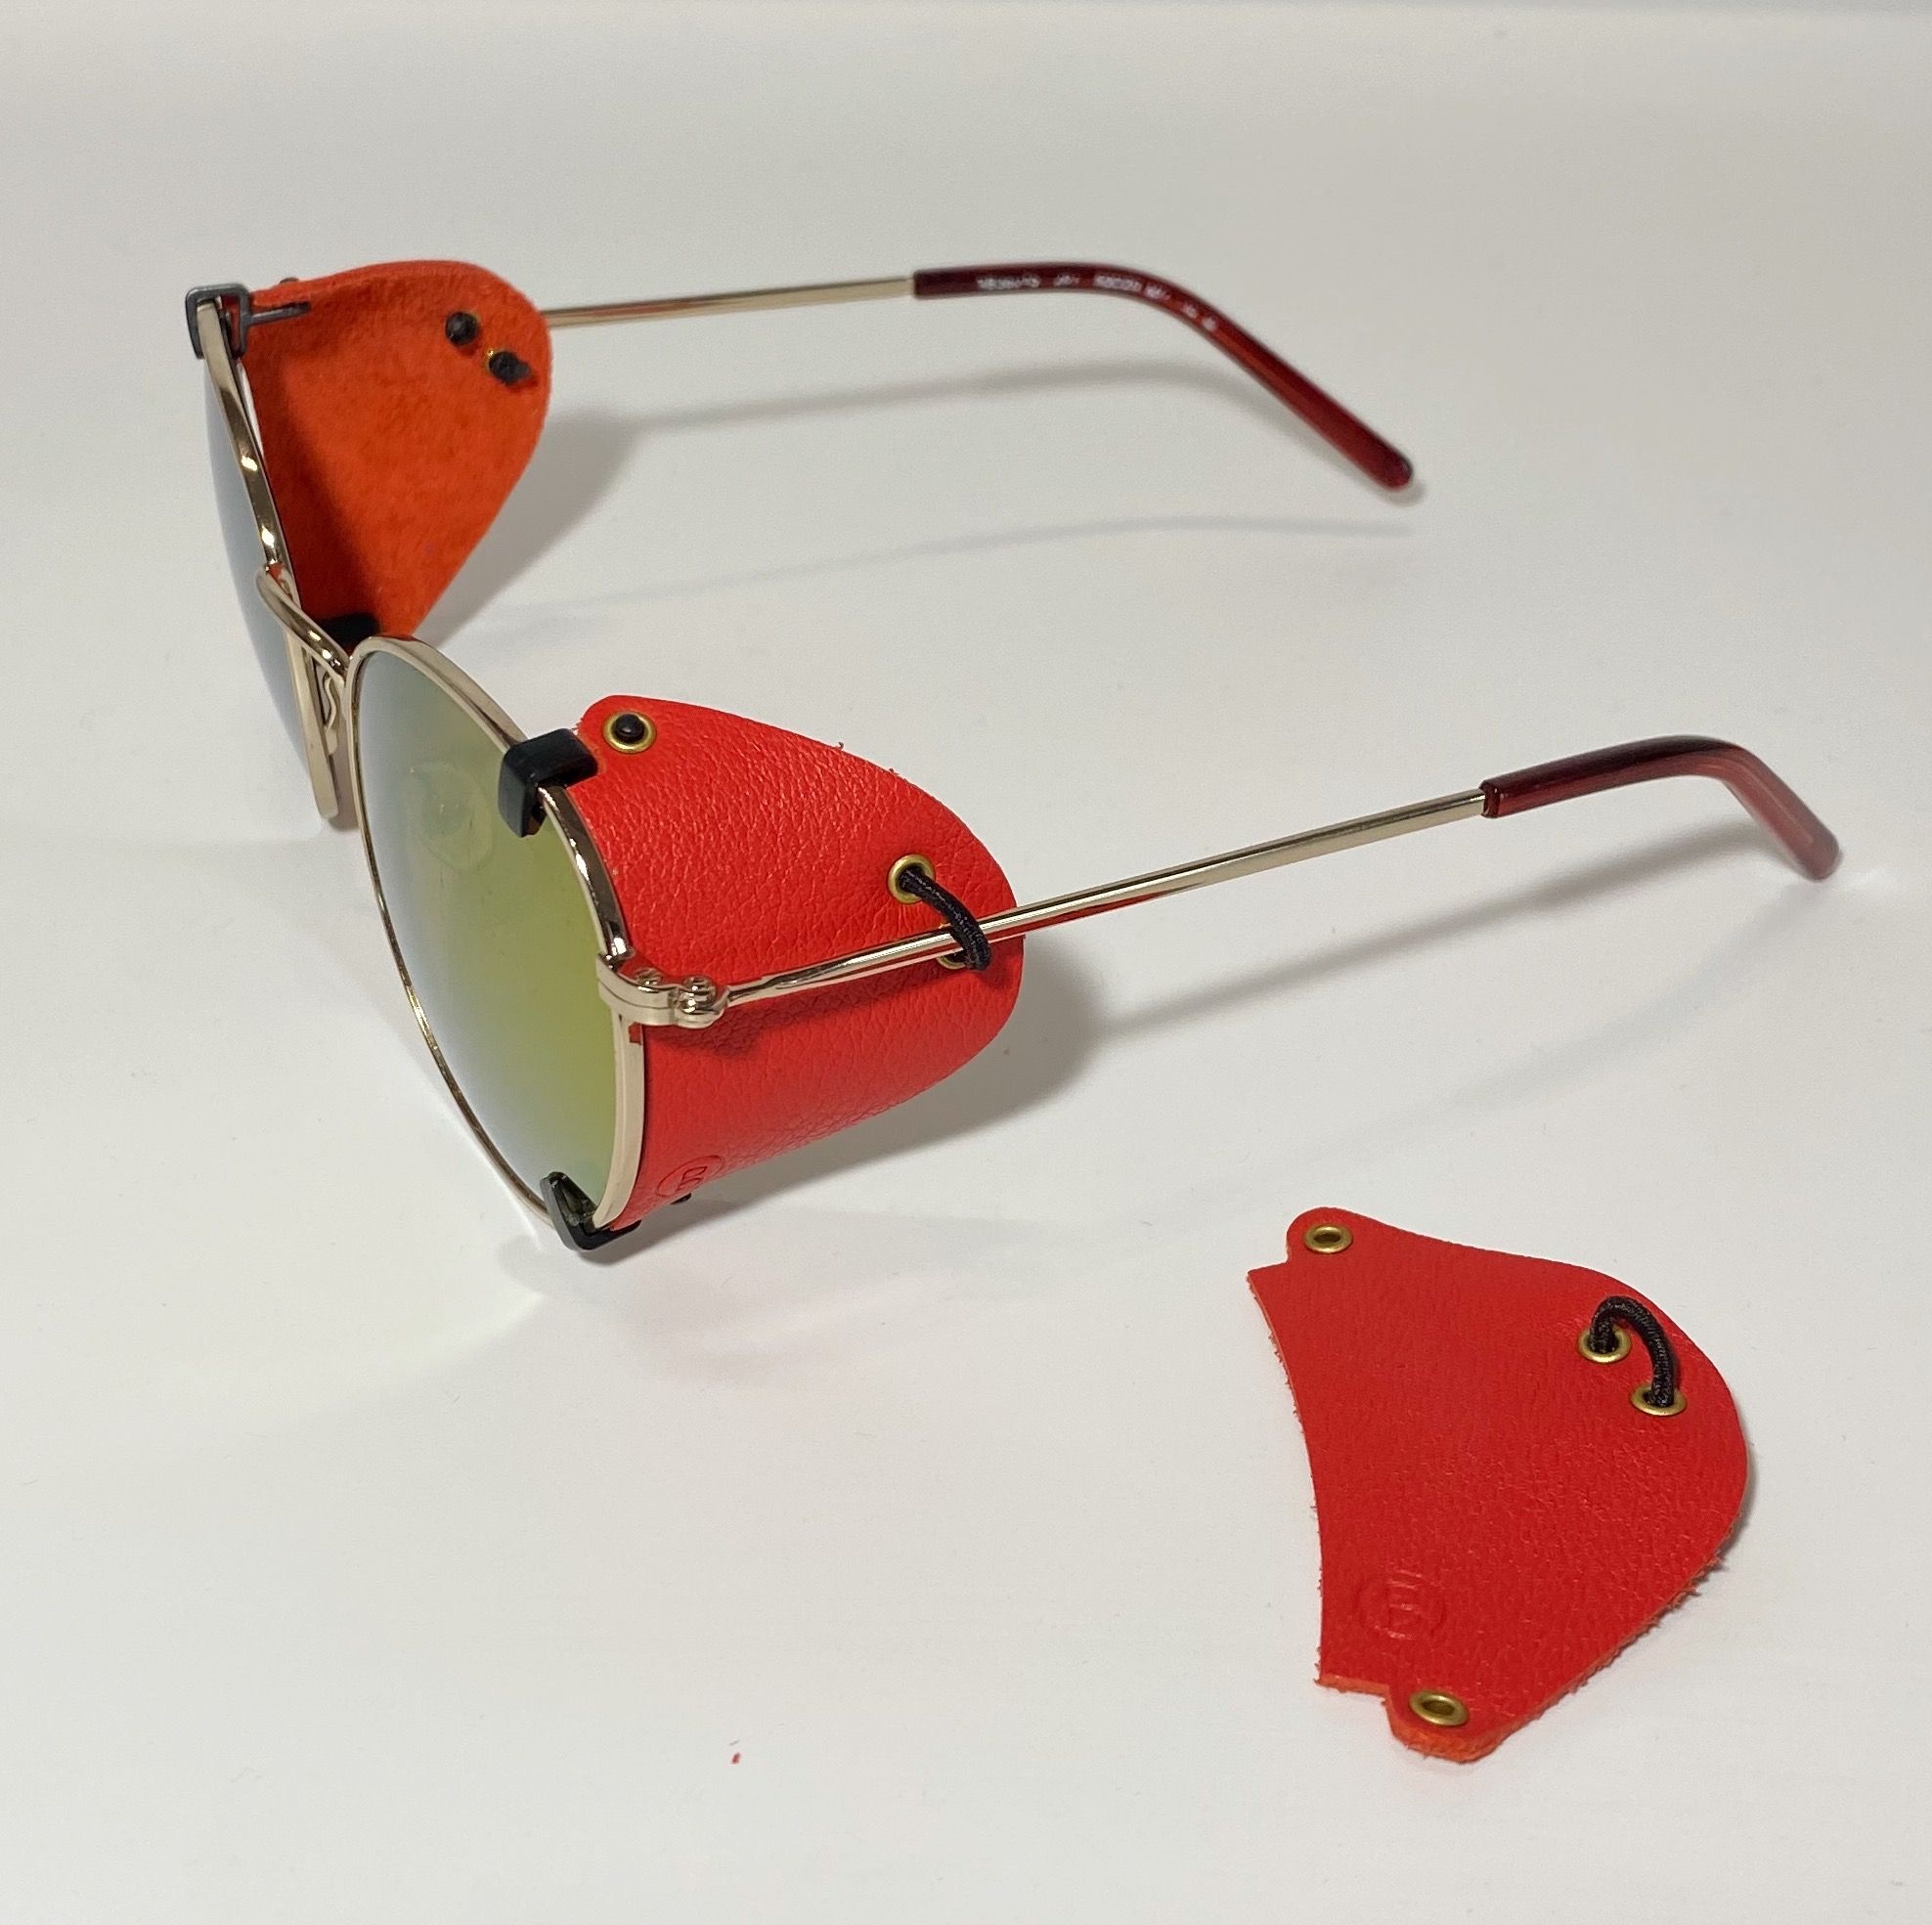 Blinkset protectores laterales para gafas de sol modelo Fire Side Shields